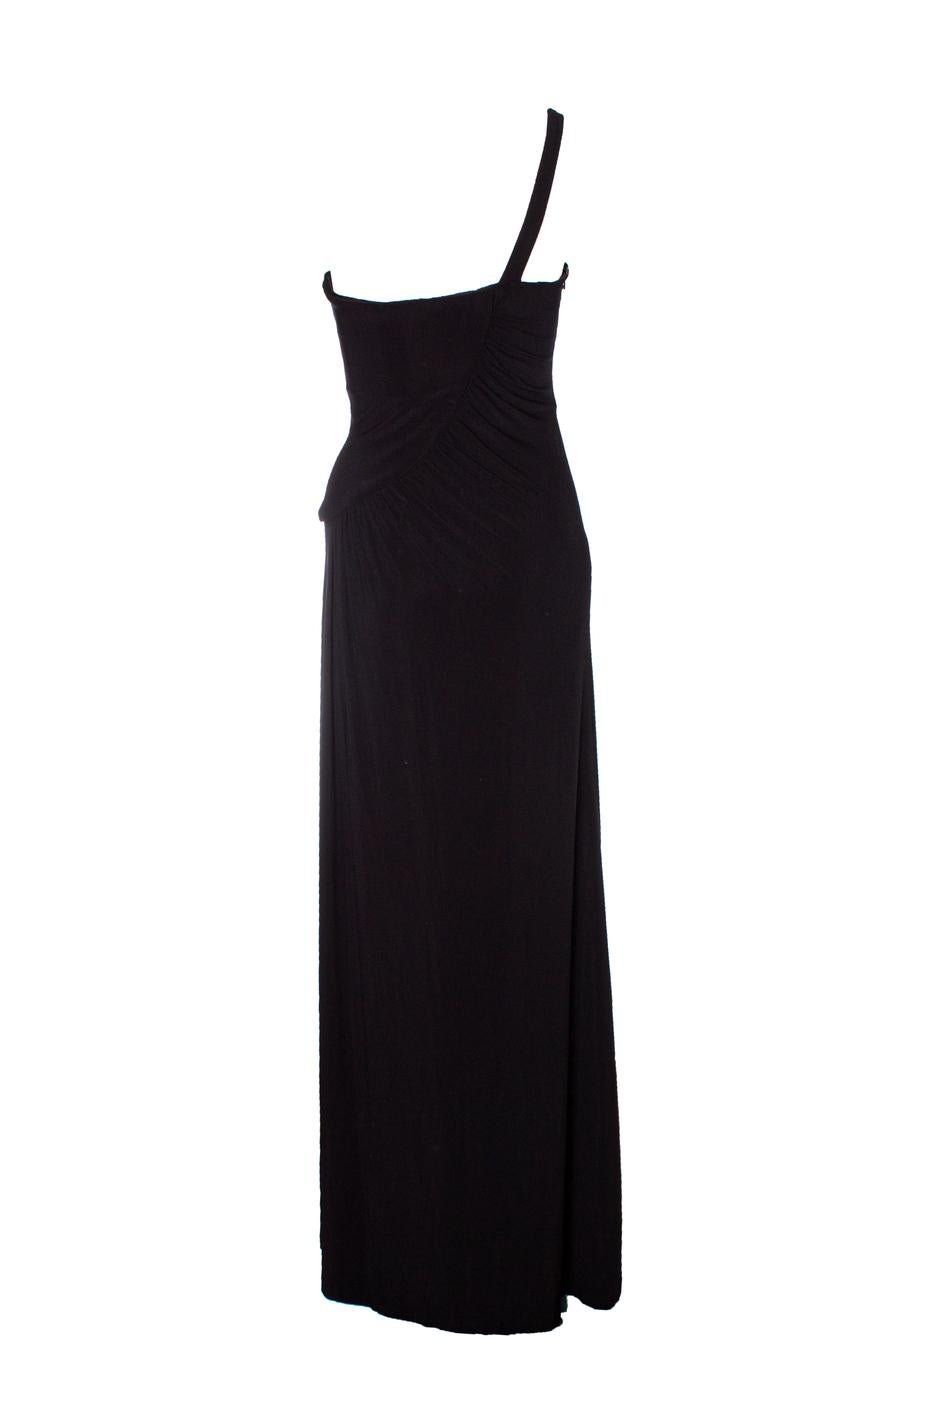 Blumarine Blugirl, Black evening gown In Excellent Condition For Sale In AMSTERDAM, NL